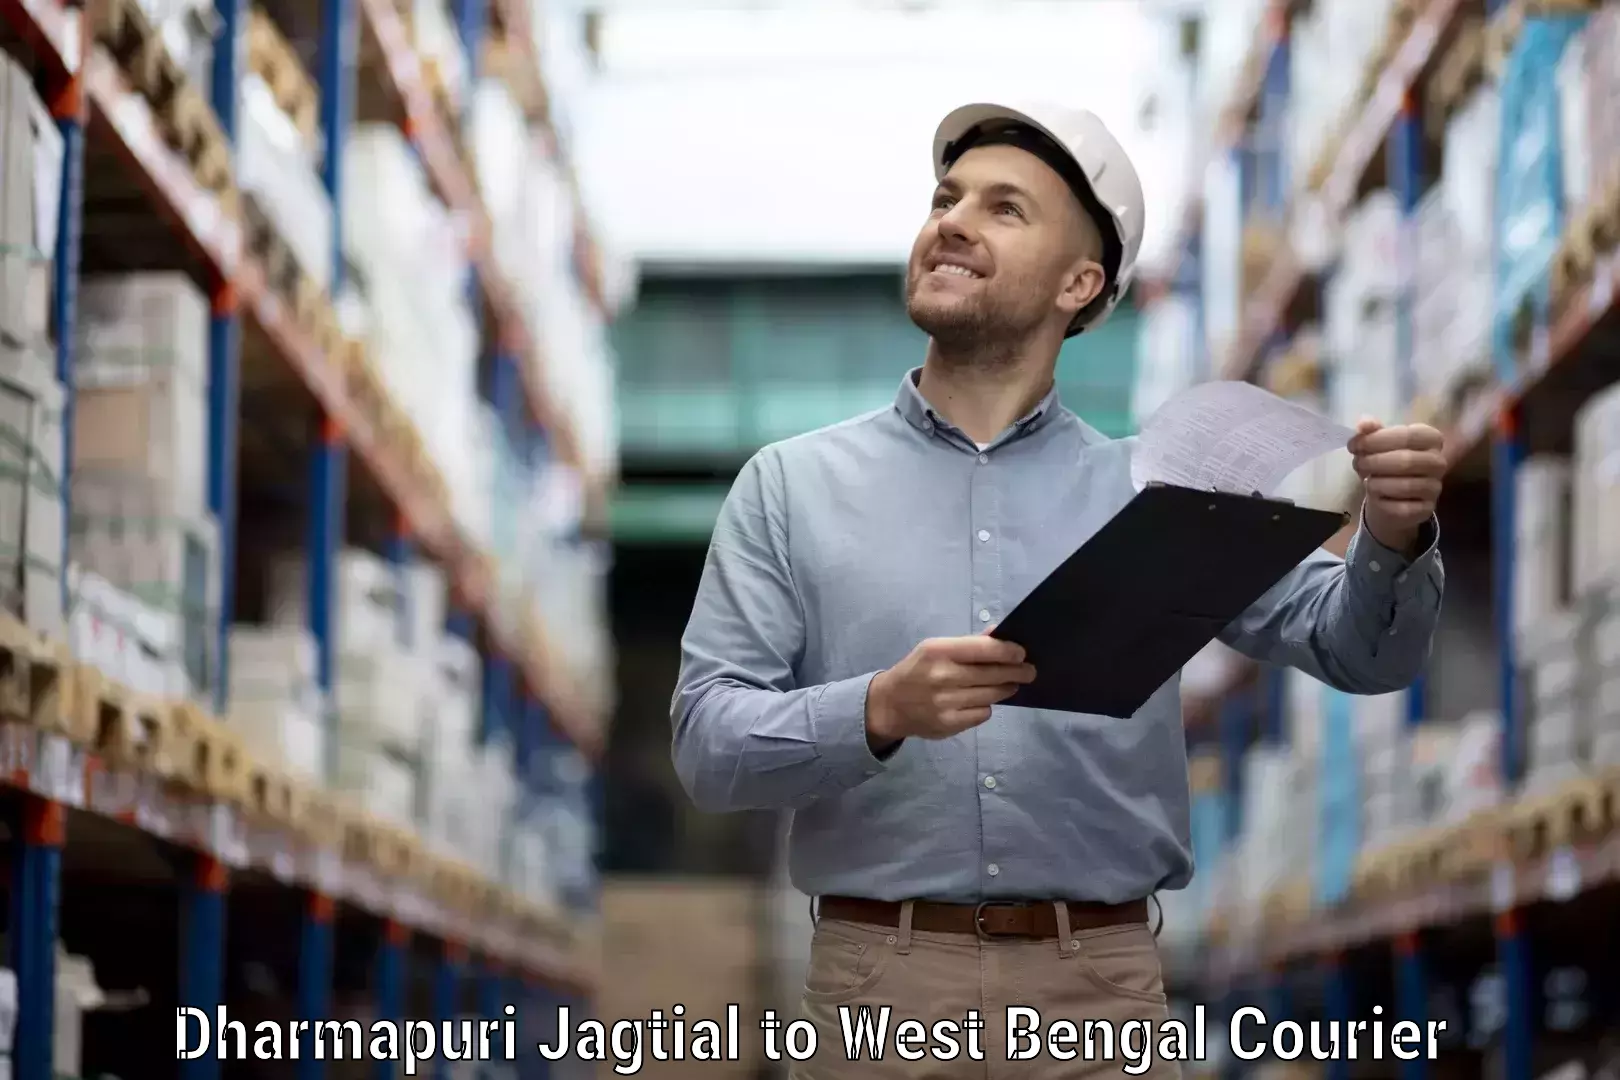 Courier service comparison Dharmapuri Jagtial to North 24 Parganas